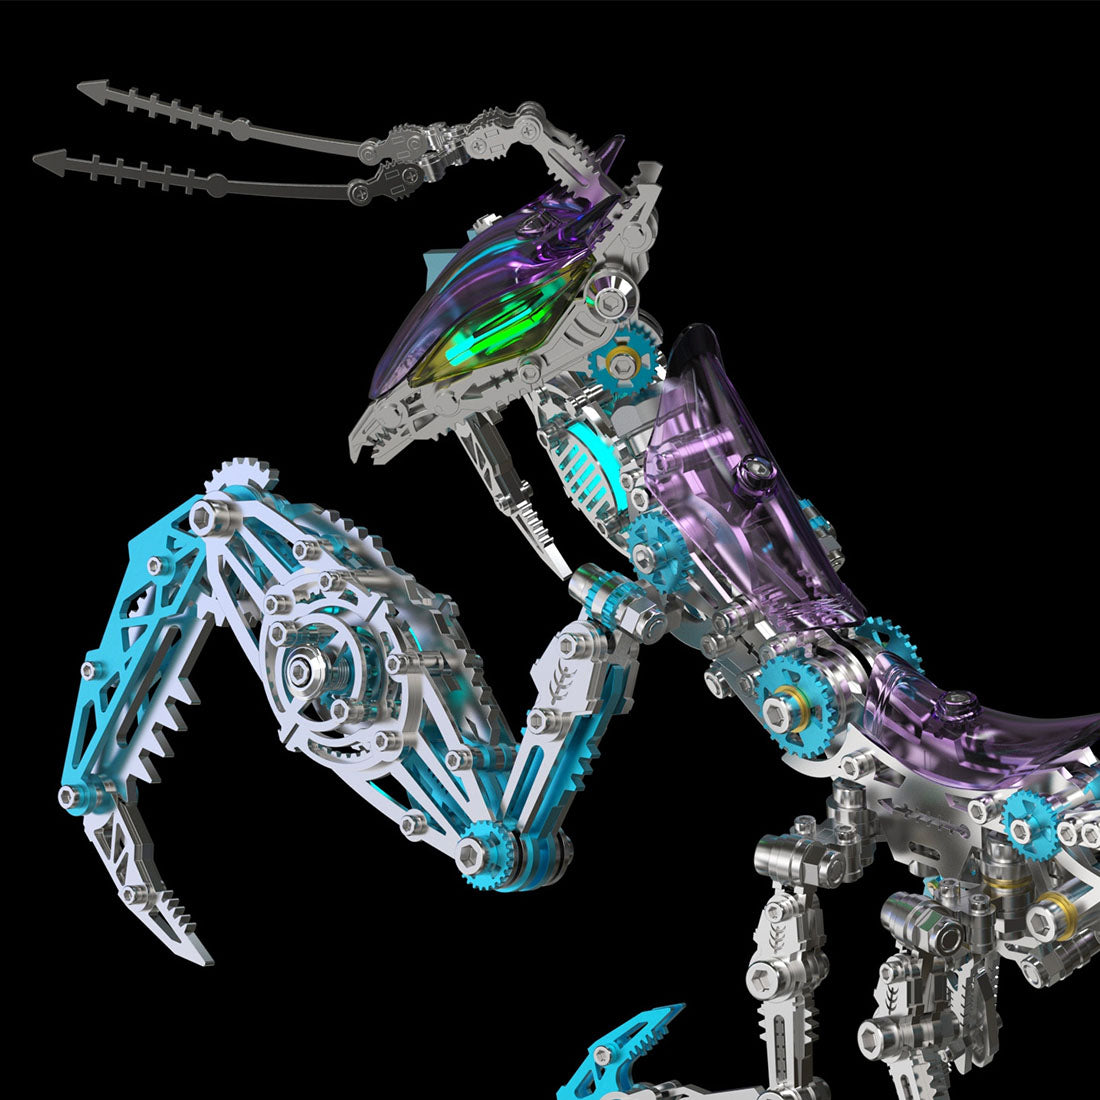 Mechanical Punk Mantis 3D Metal Model Kits DIY 1000+PCS Pre-sale